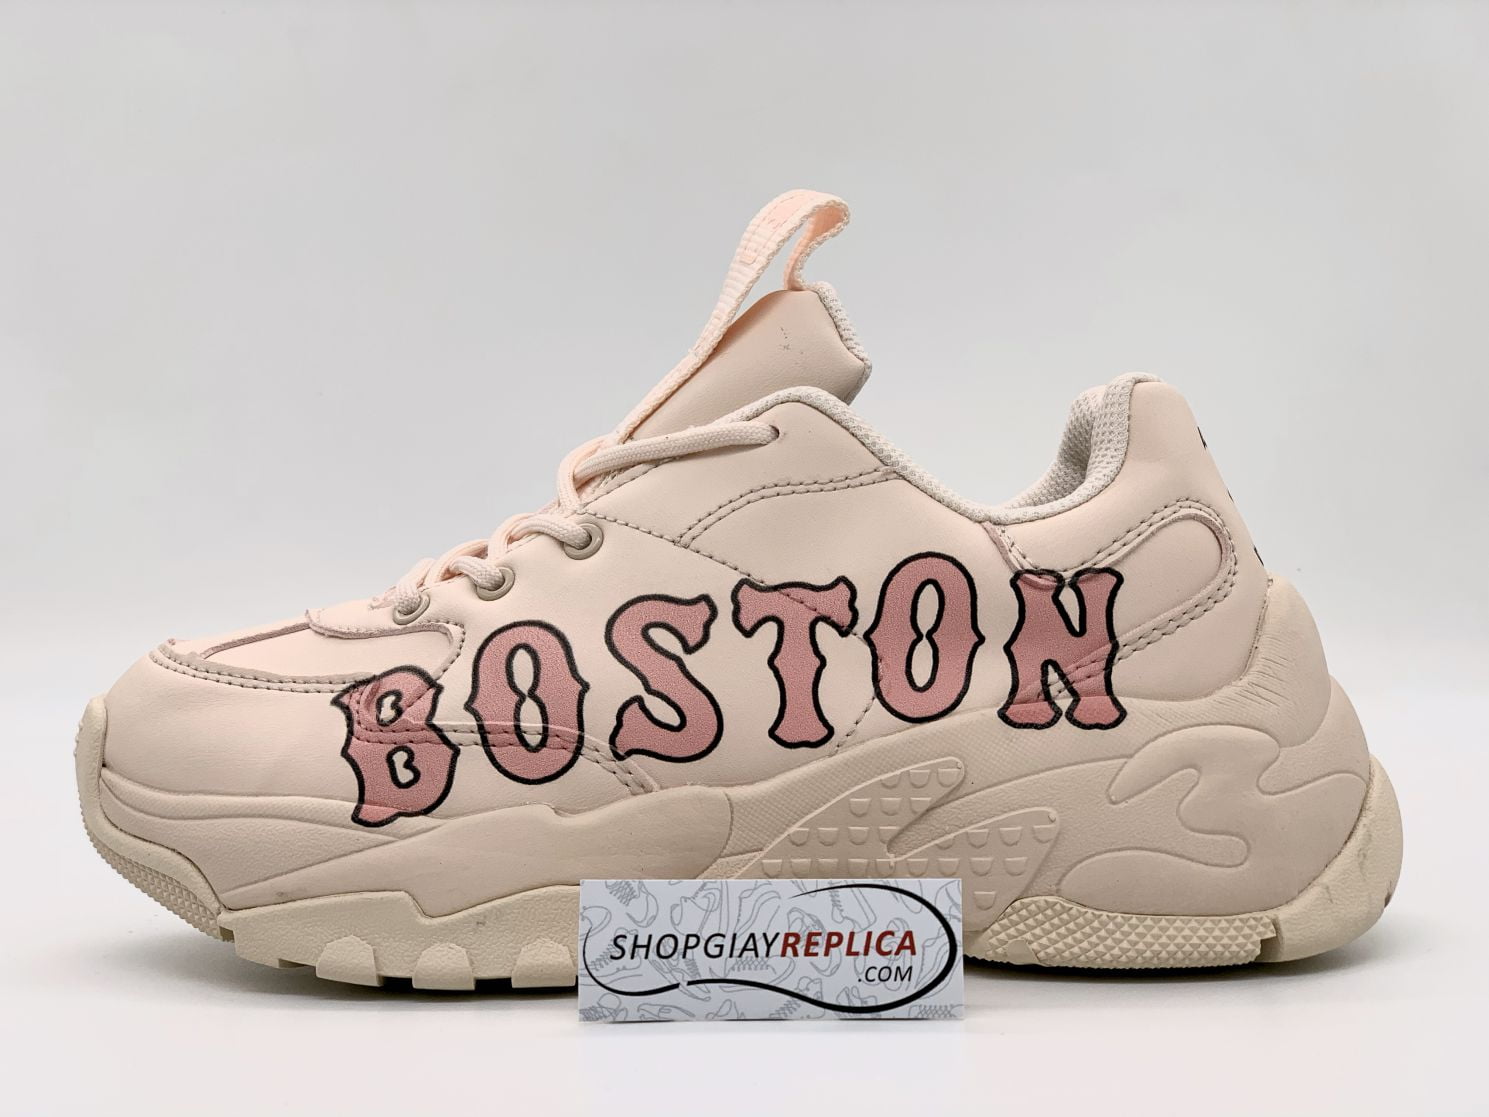 Giày Mlb Boston hồng nữ chuẩn replica 11 tại Shopgiayreplicacom